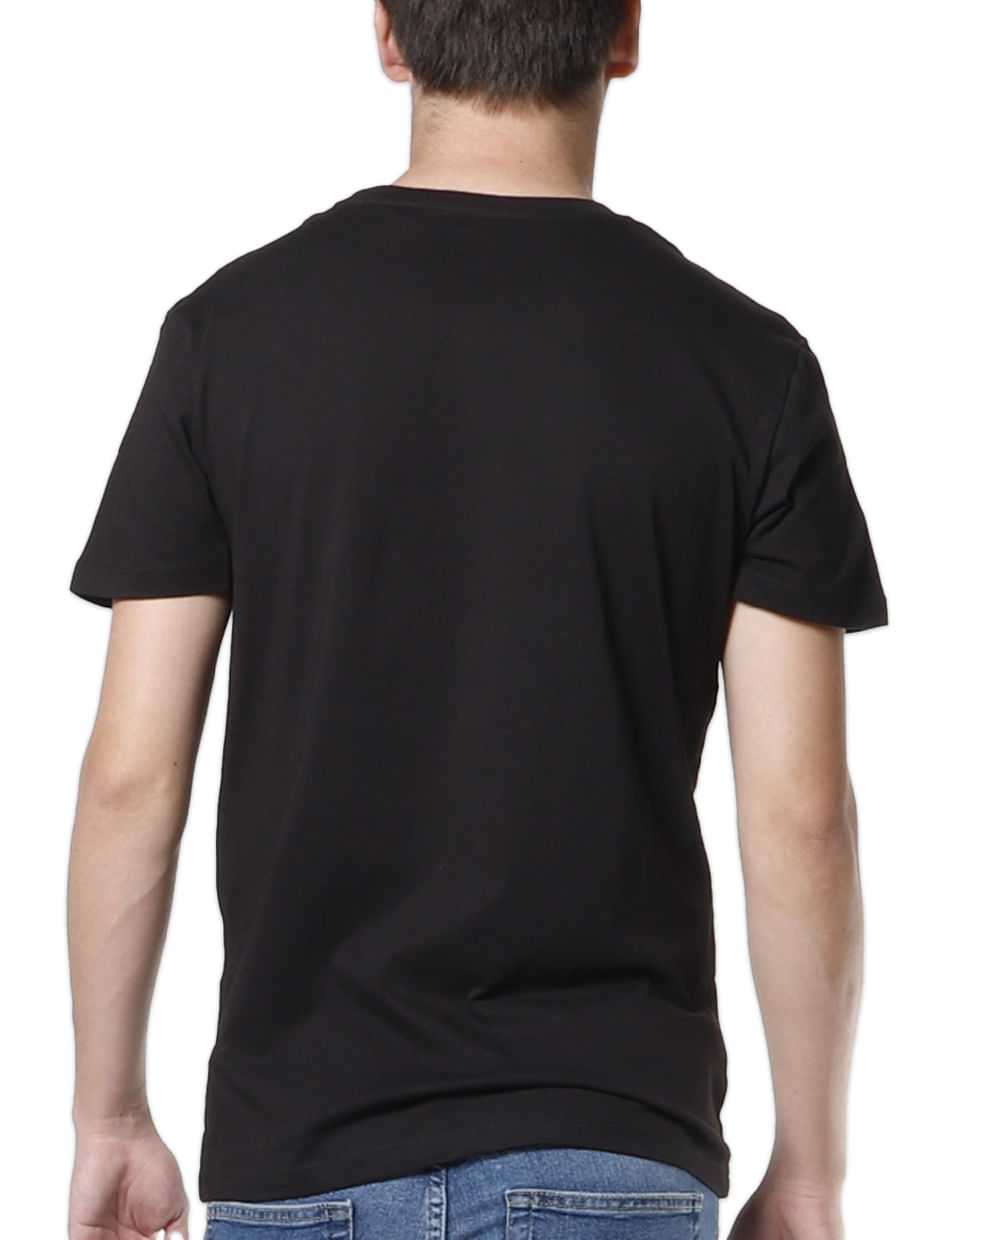 Camisetas negras Serenity para hombre, camisetas negras para hombre,  camisetas geniales para hombre, Negro 